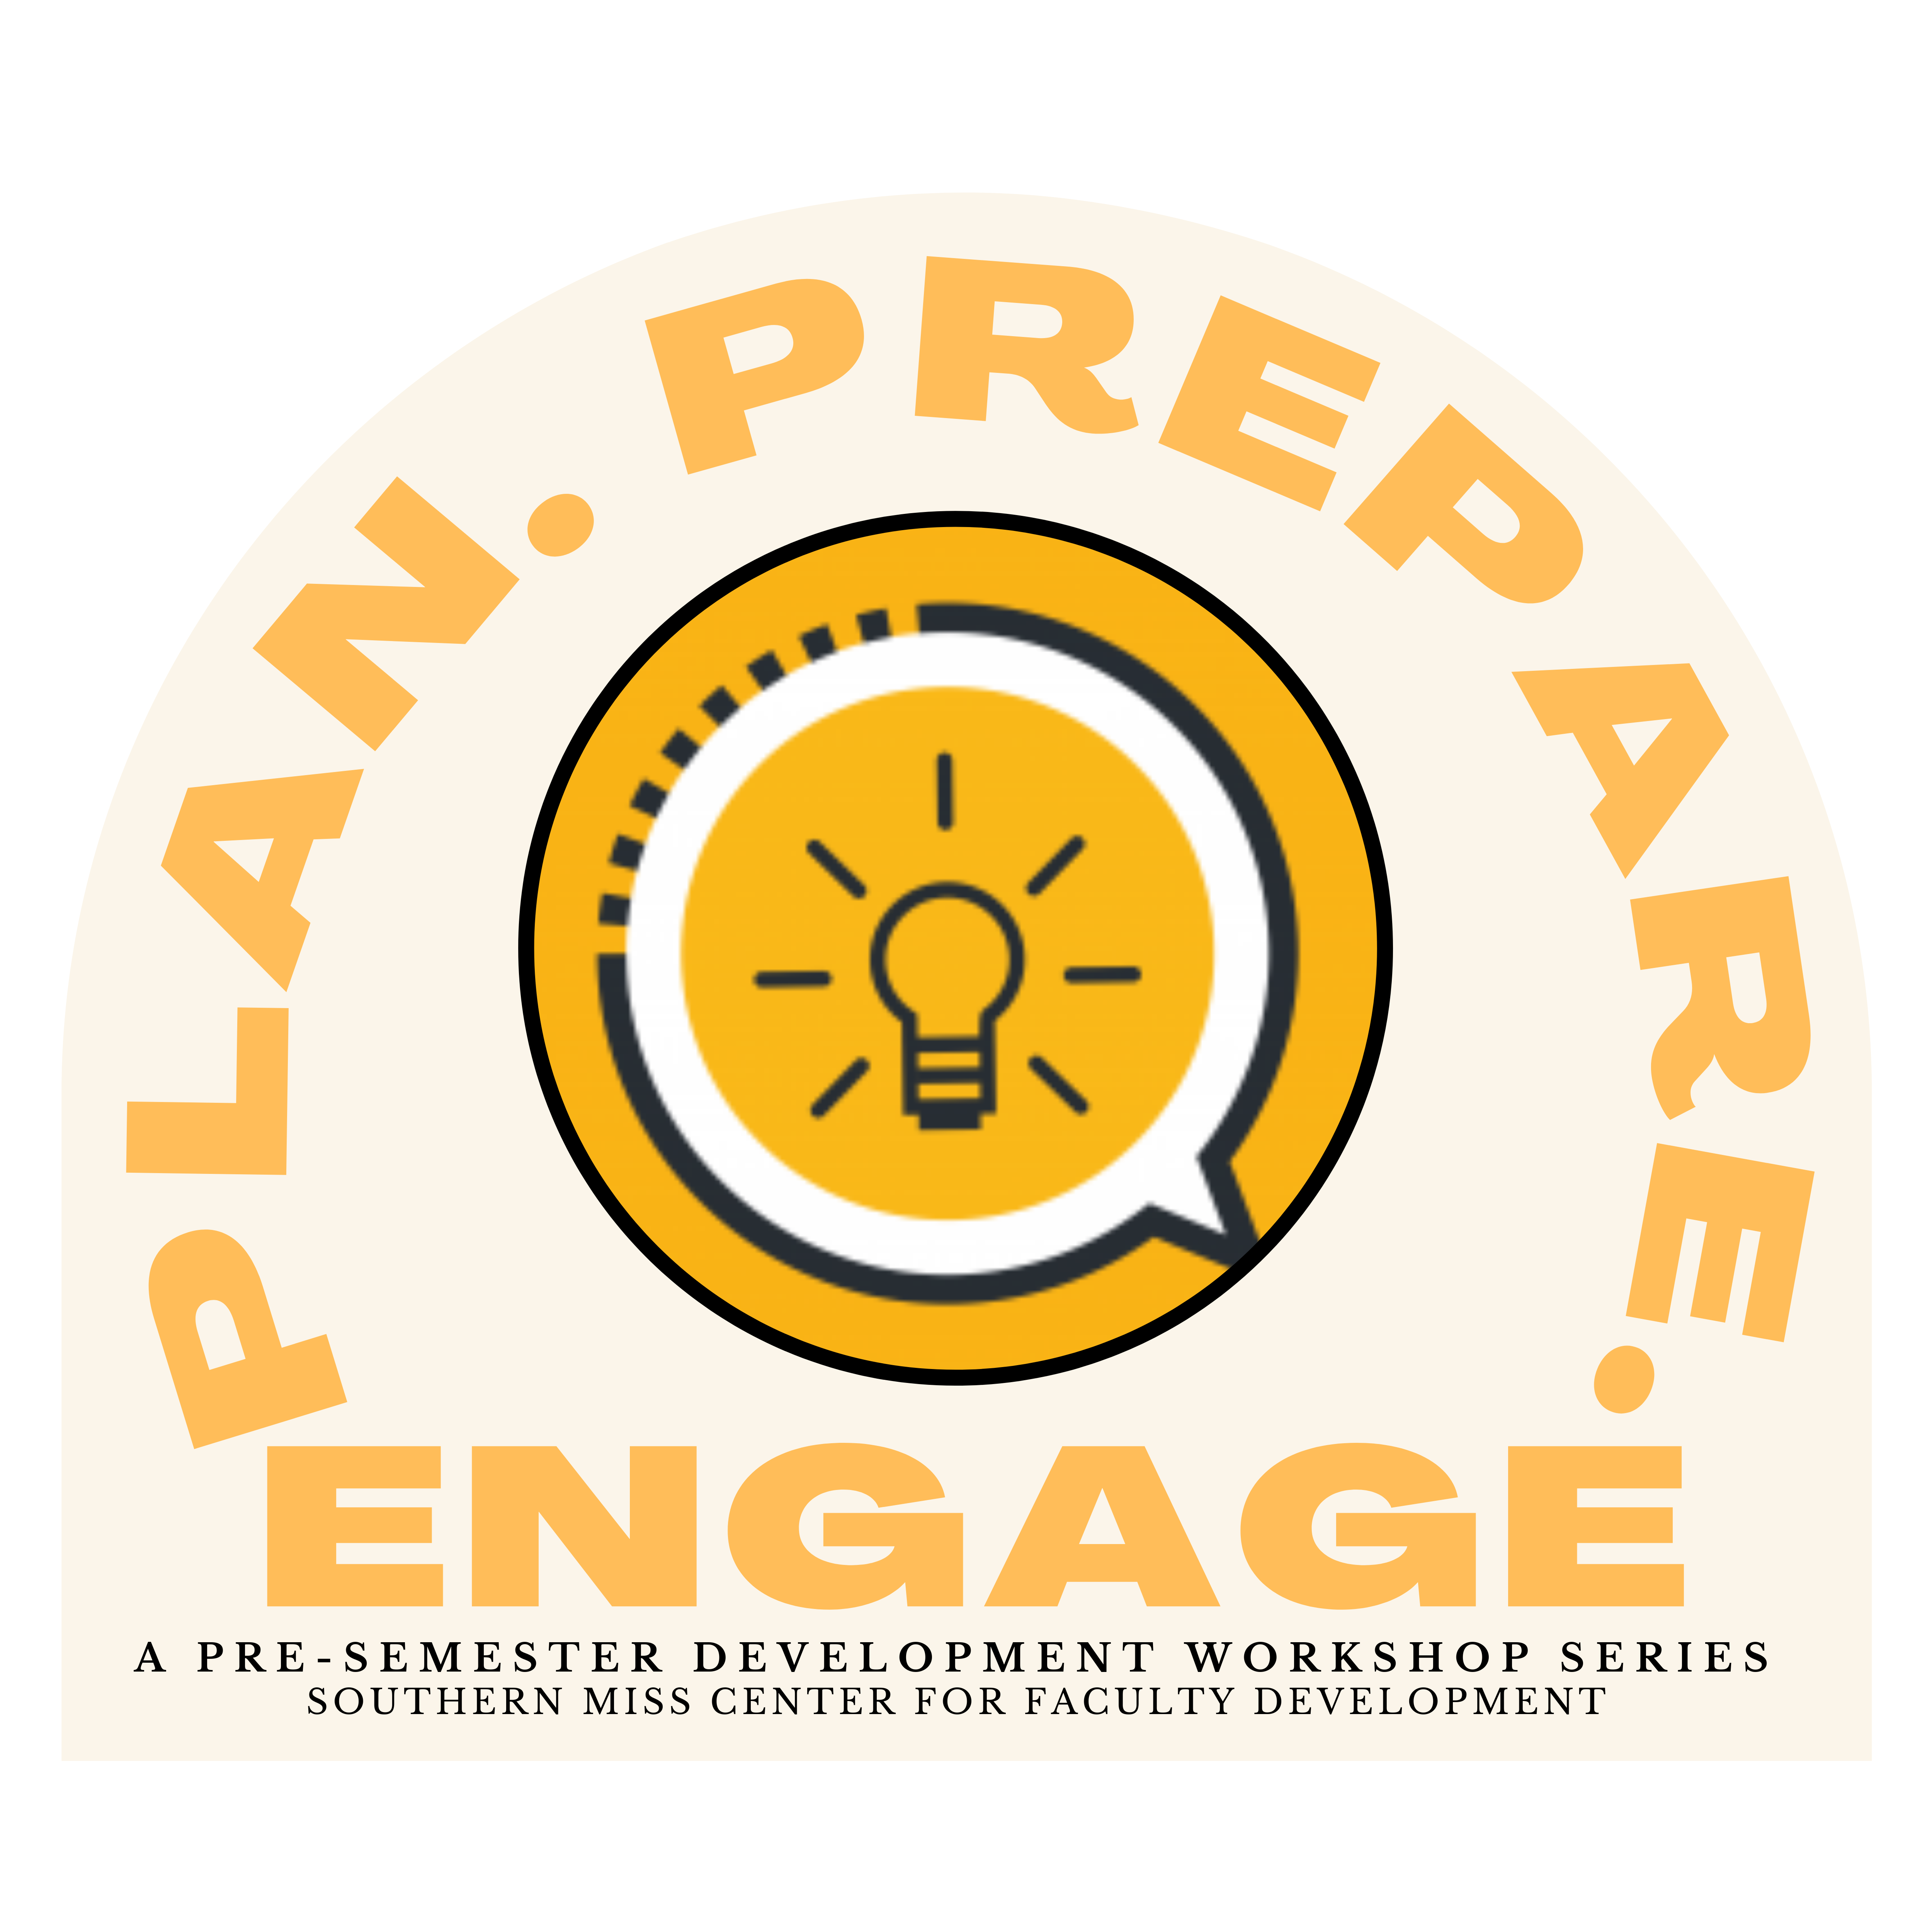 Plan, Prepare and Engage Workshop Series Logo